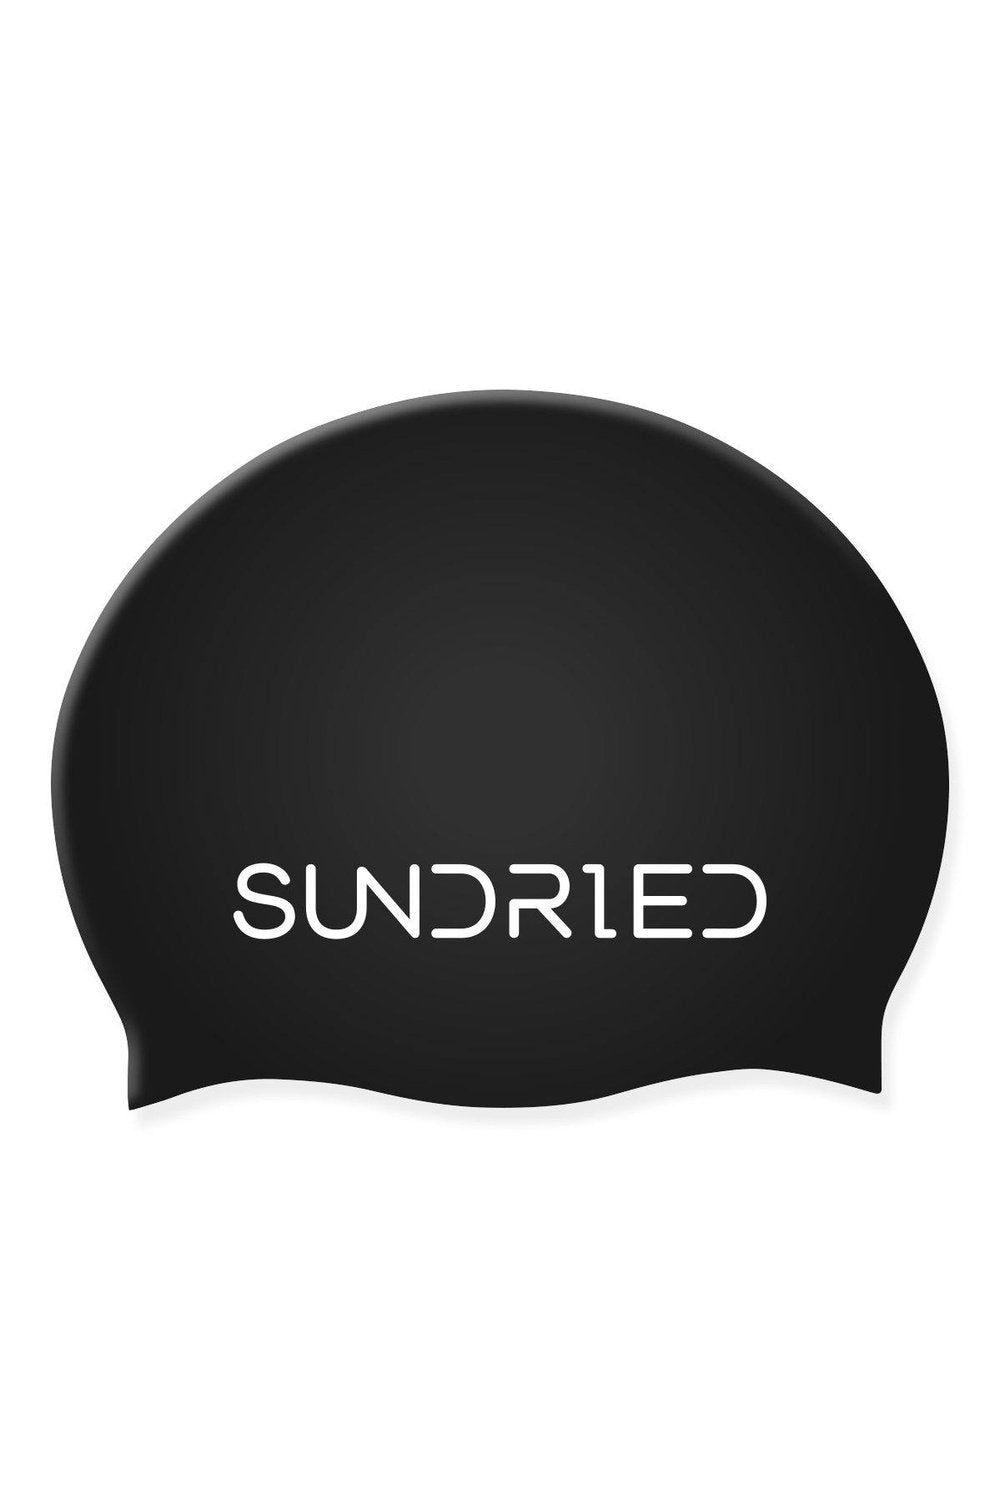 Sundried Swim Hat Swimming Accessories Black SD0111 Black Activewear